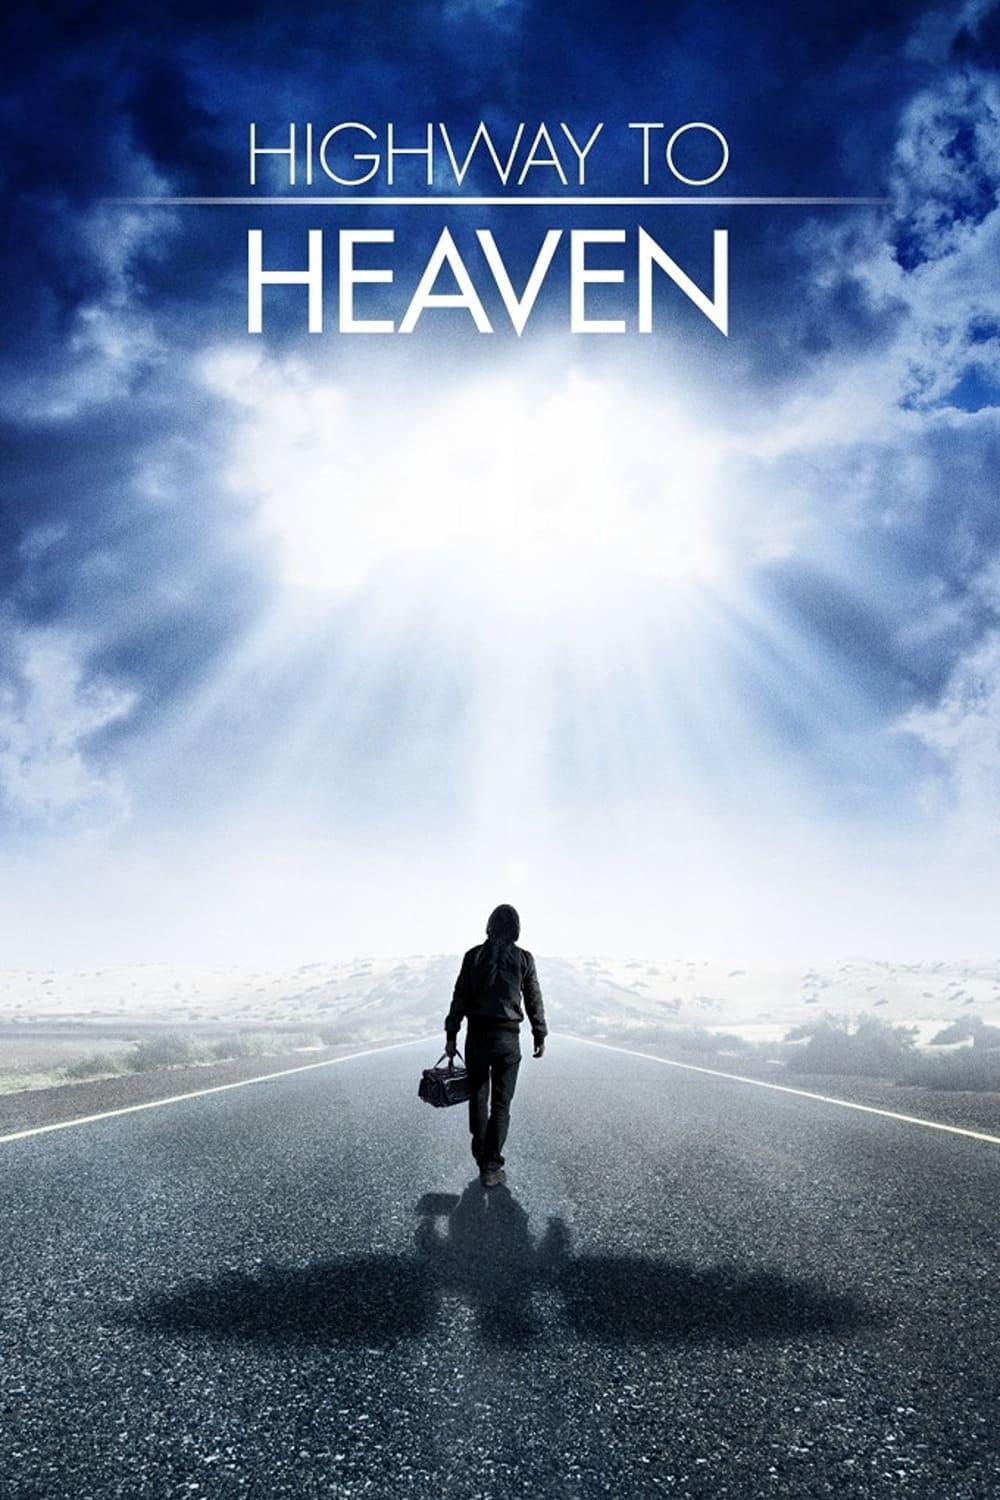 Highway to Heaven poster